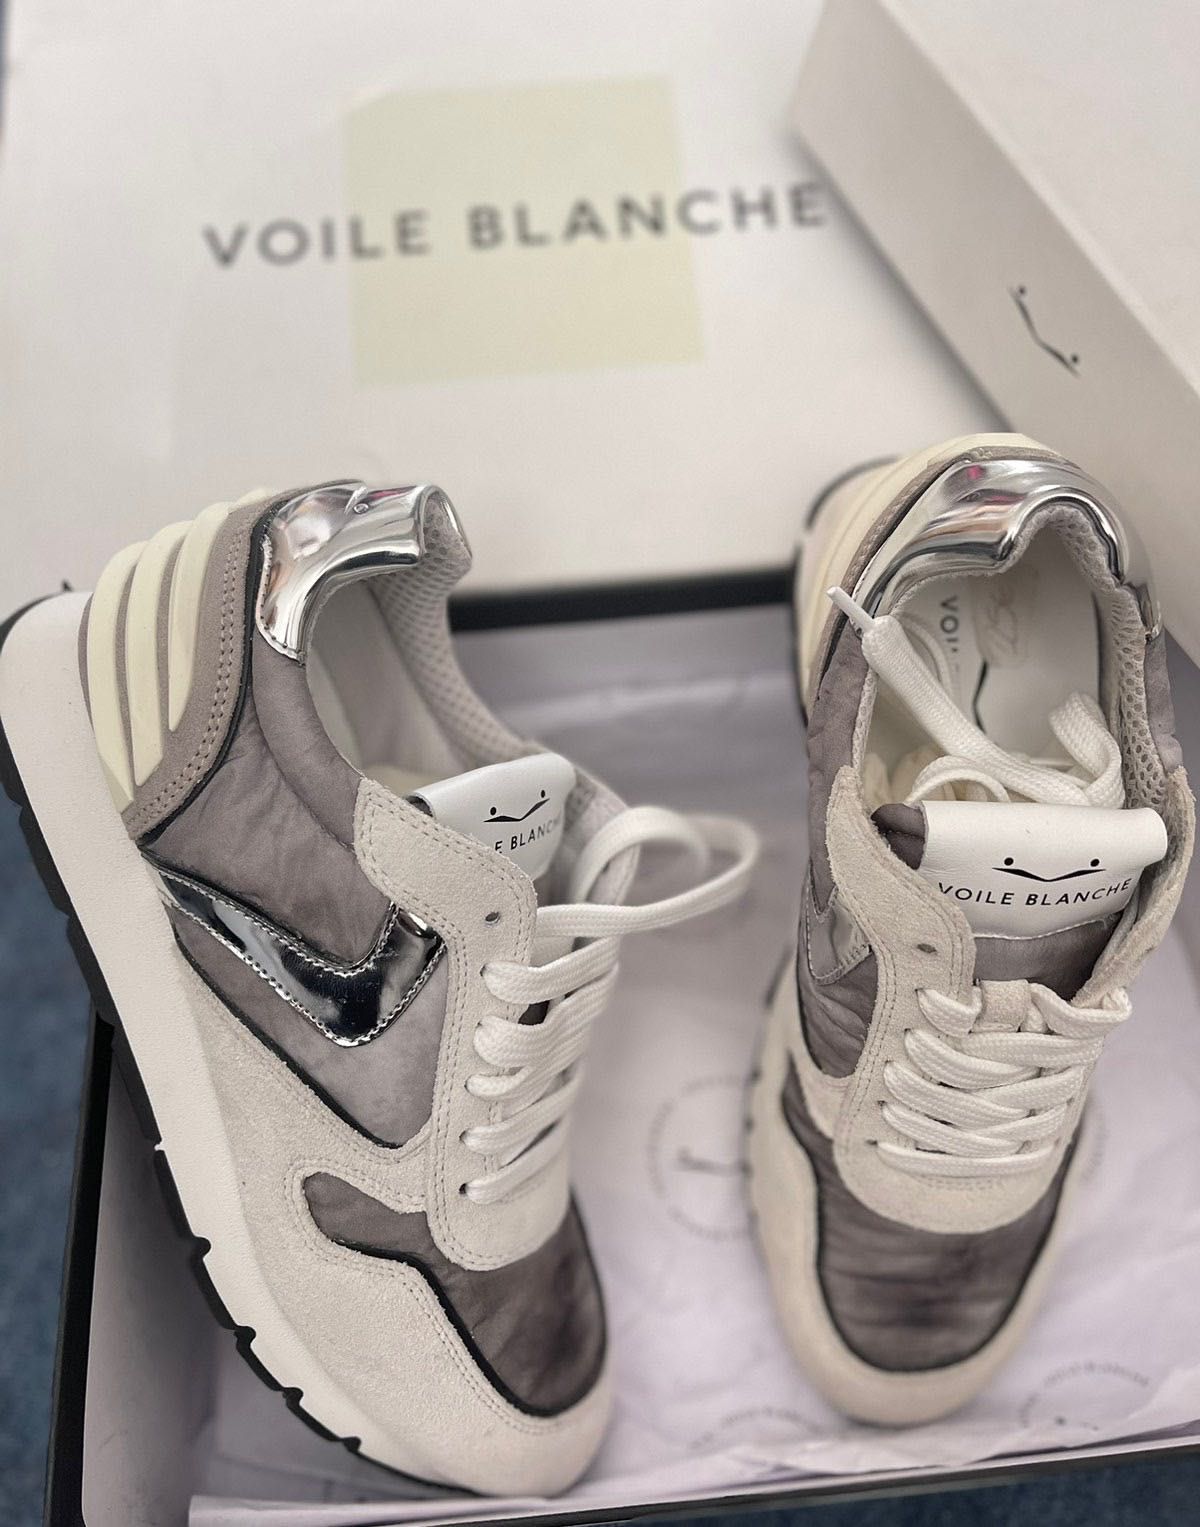 Новые кроссовки,бренд Voile Blanche,37 размер.Оригинал!